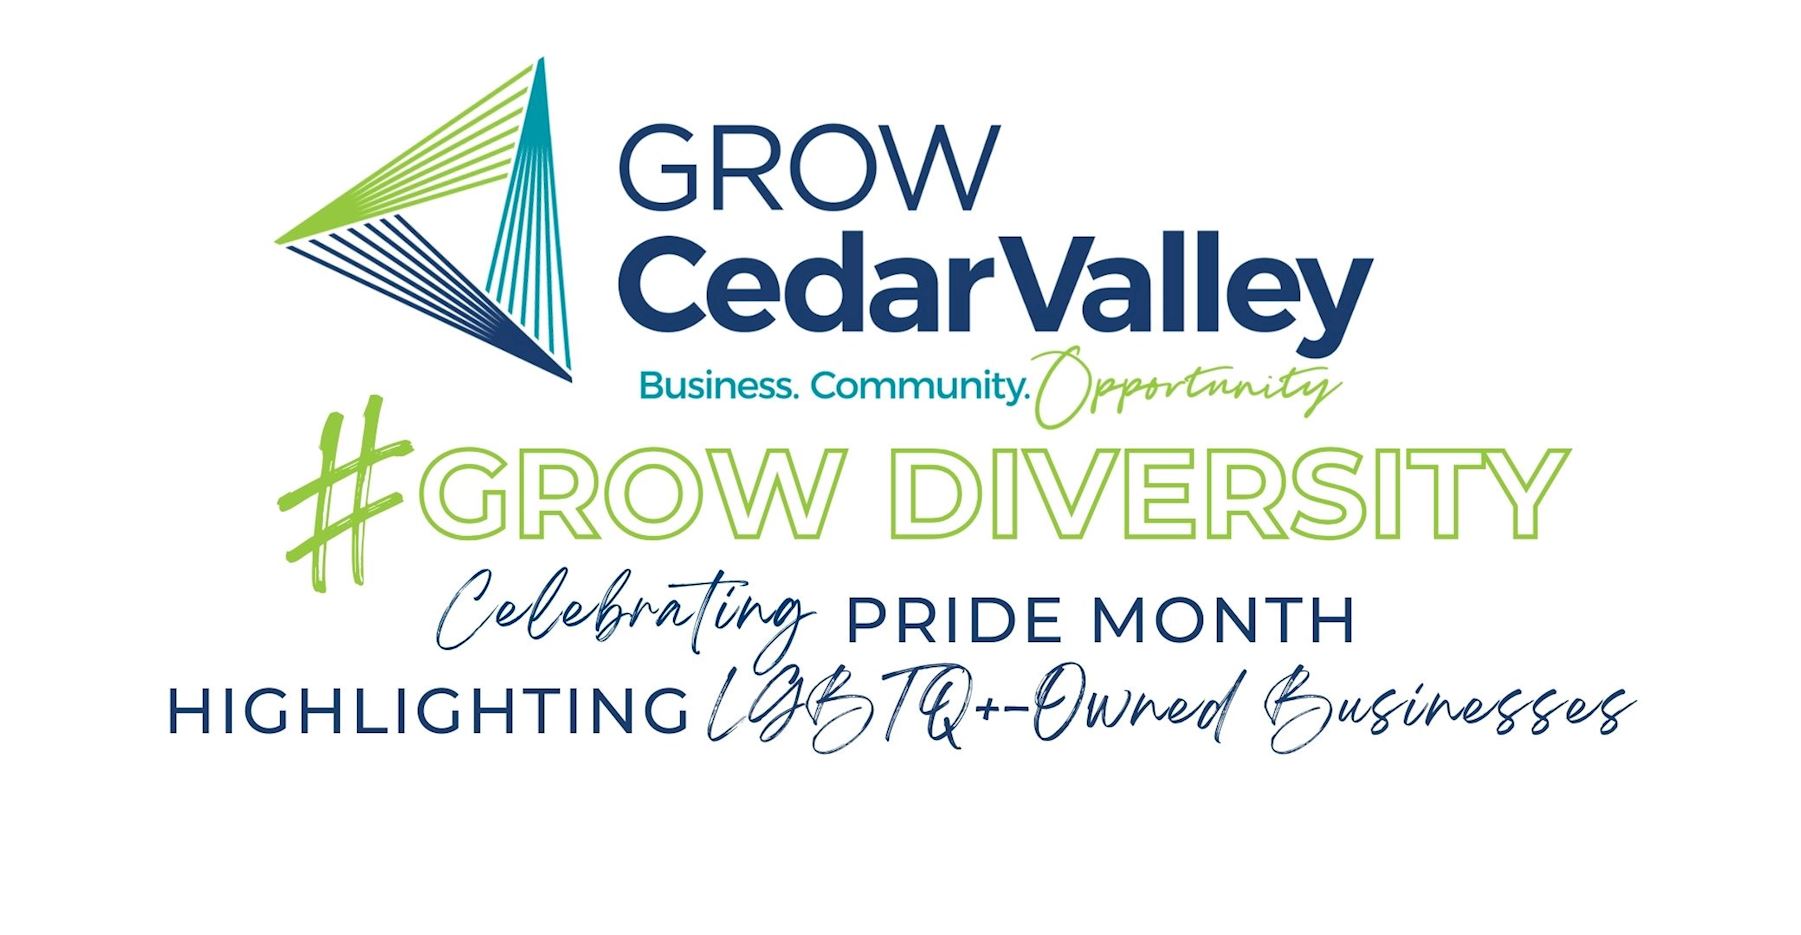 Celebrating Pride Month in the Cedar Valley